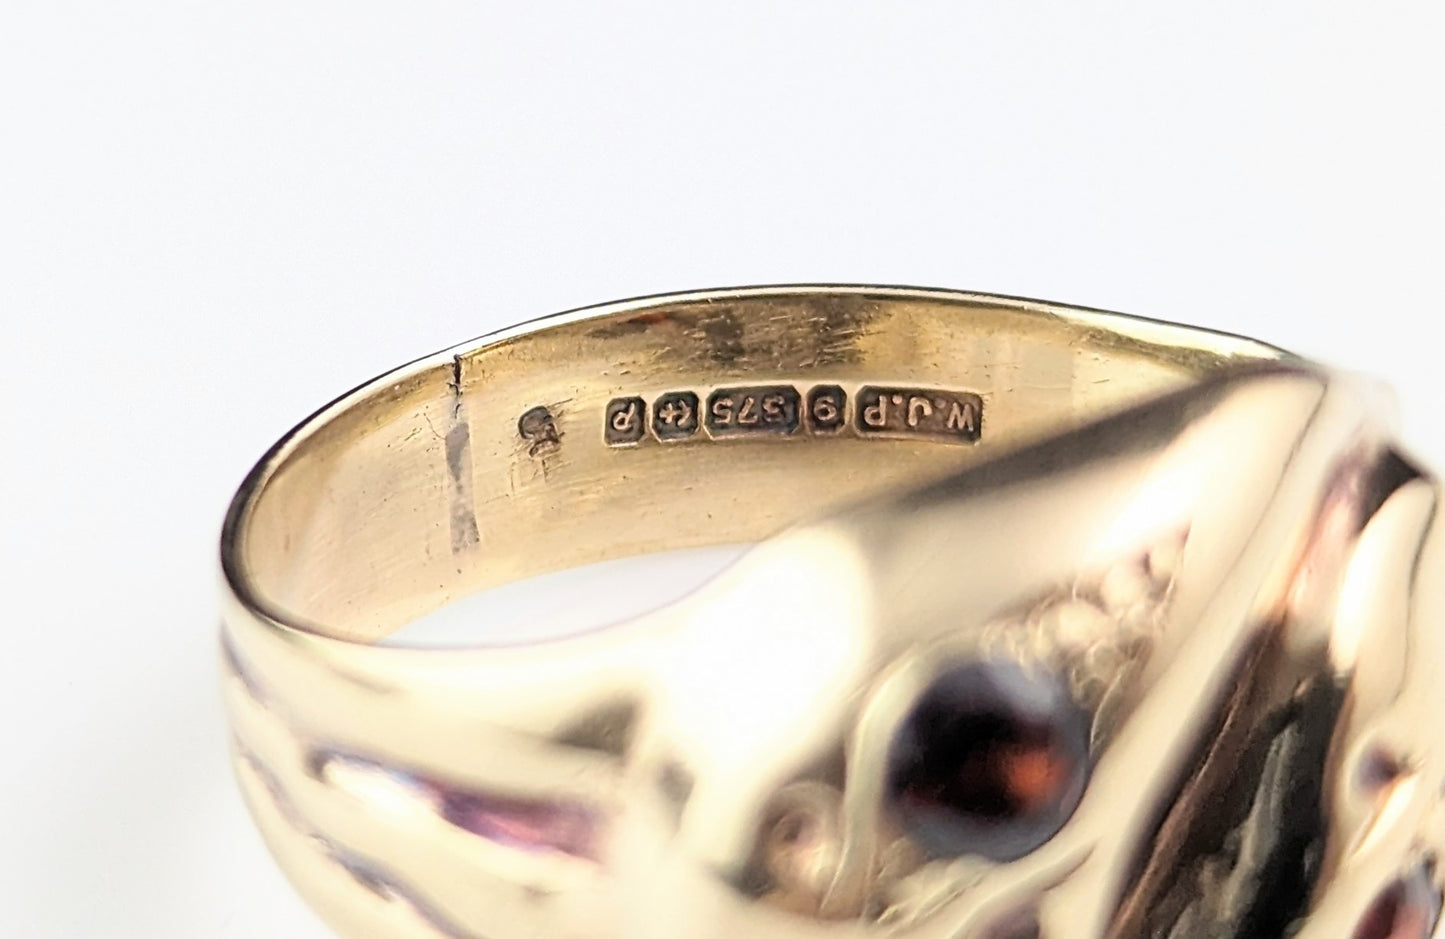 Vintage 9ct gold Garnet snake ring, Victorian style